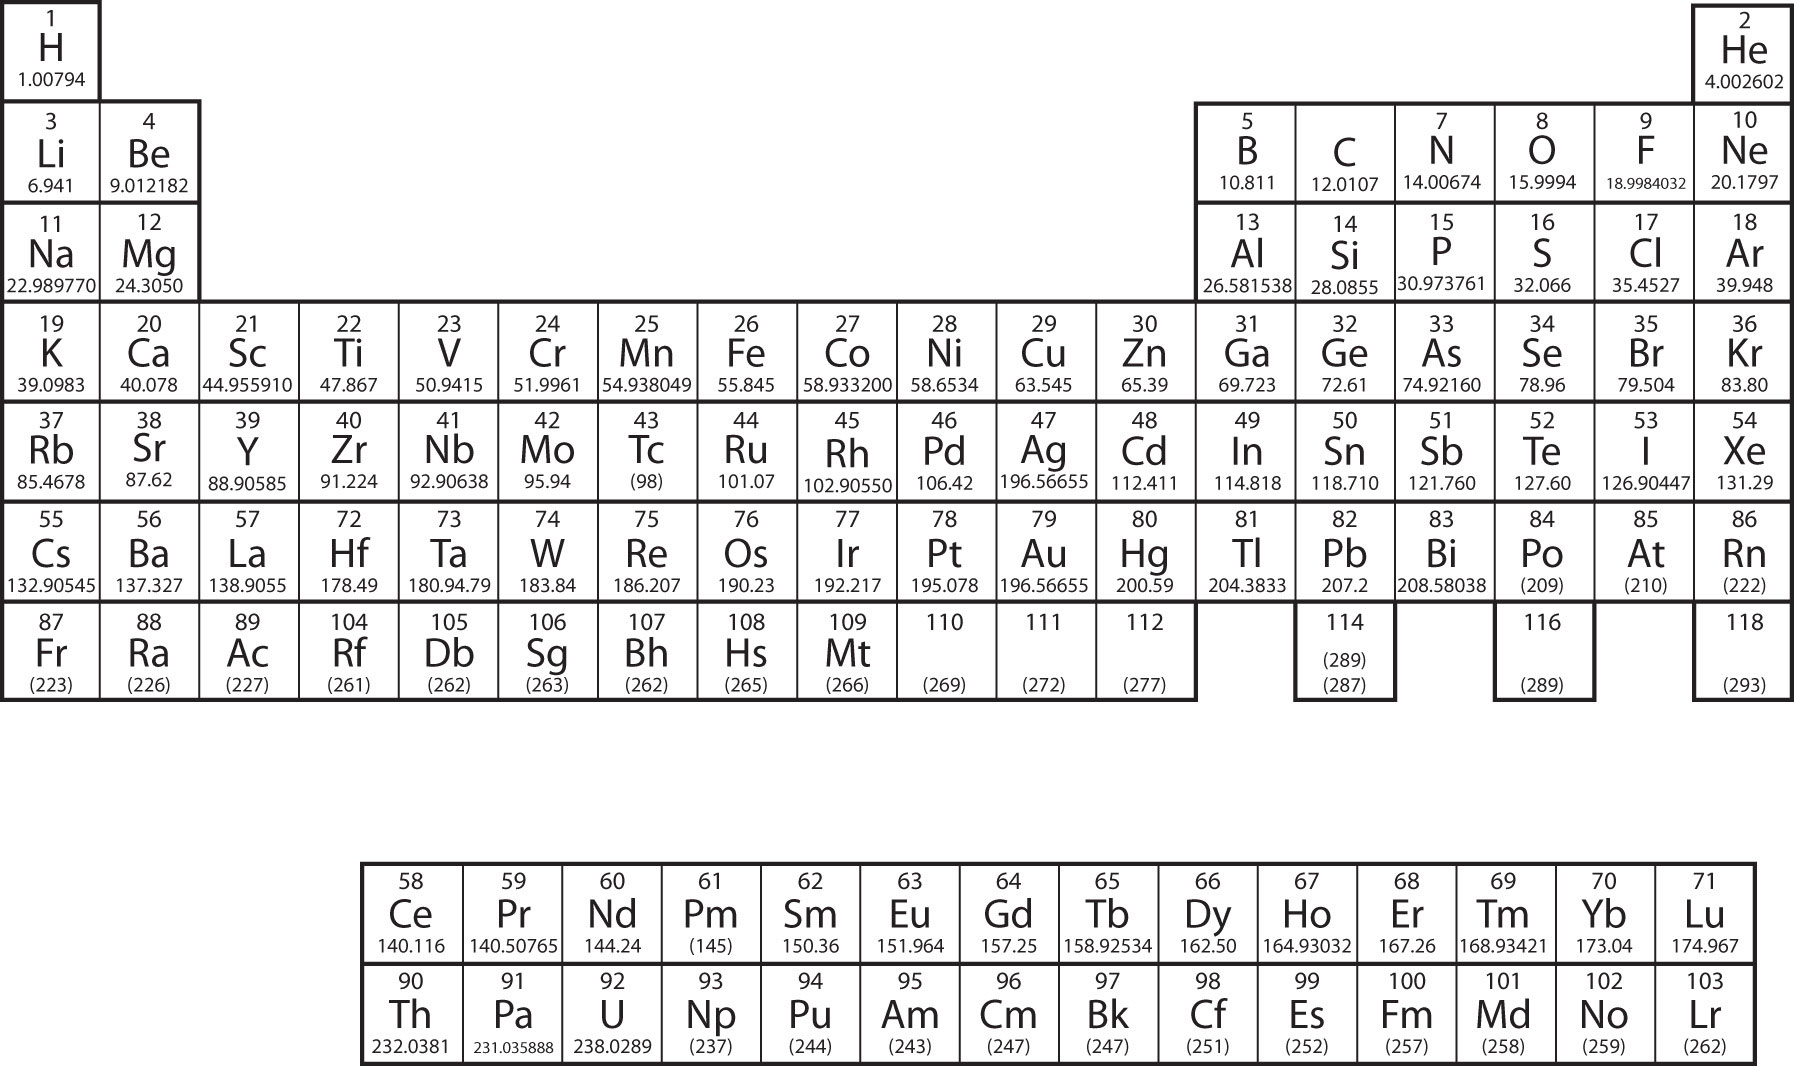 Chemistry Configuration Chart